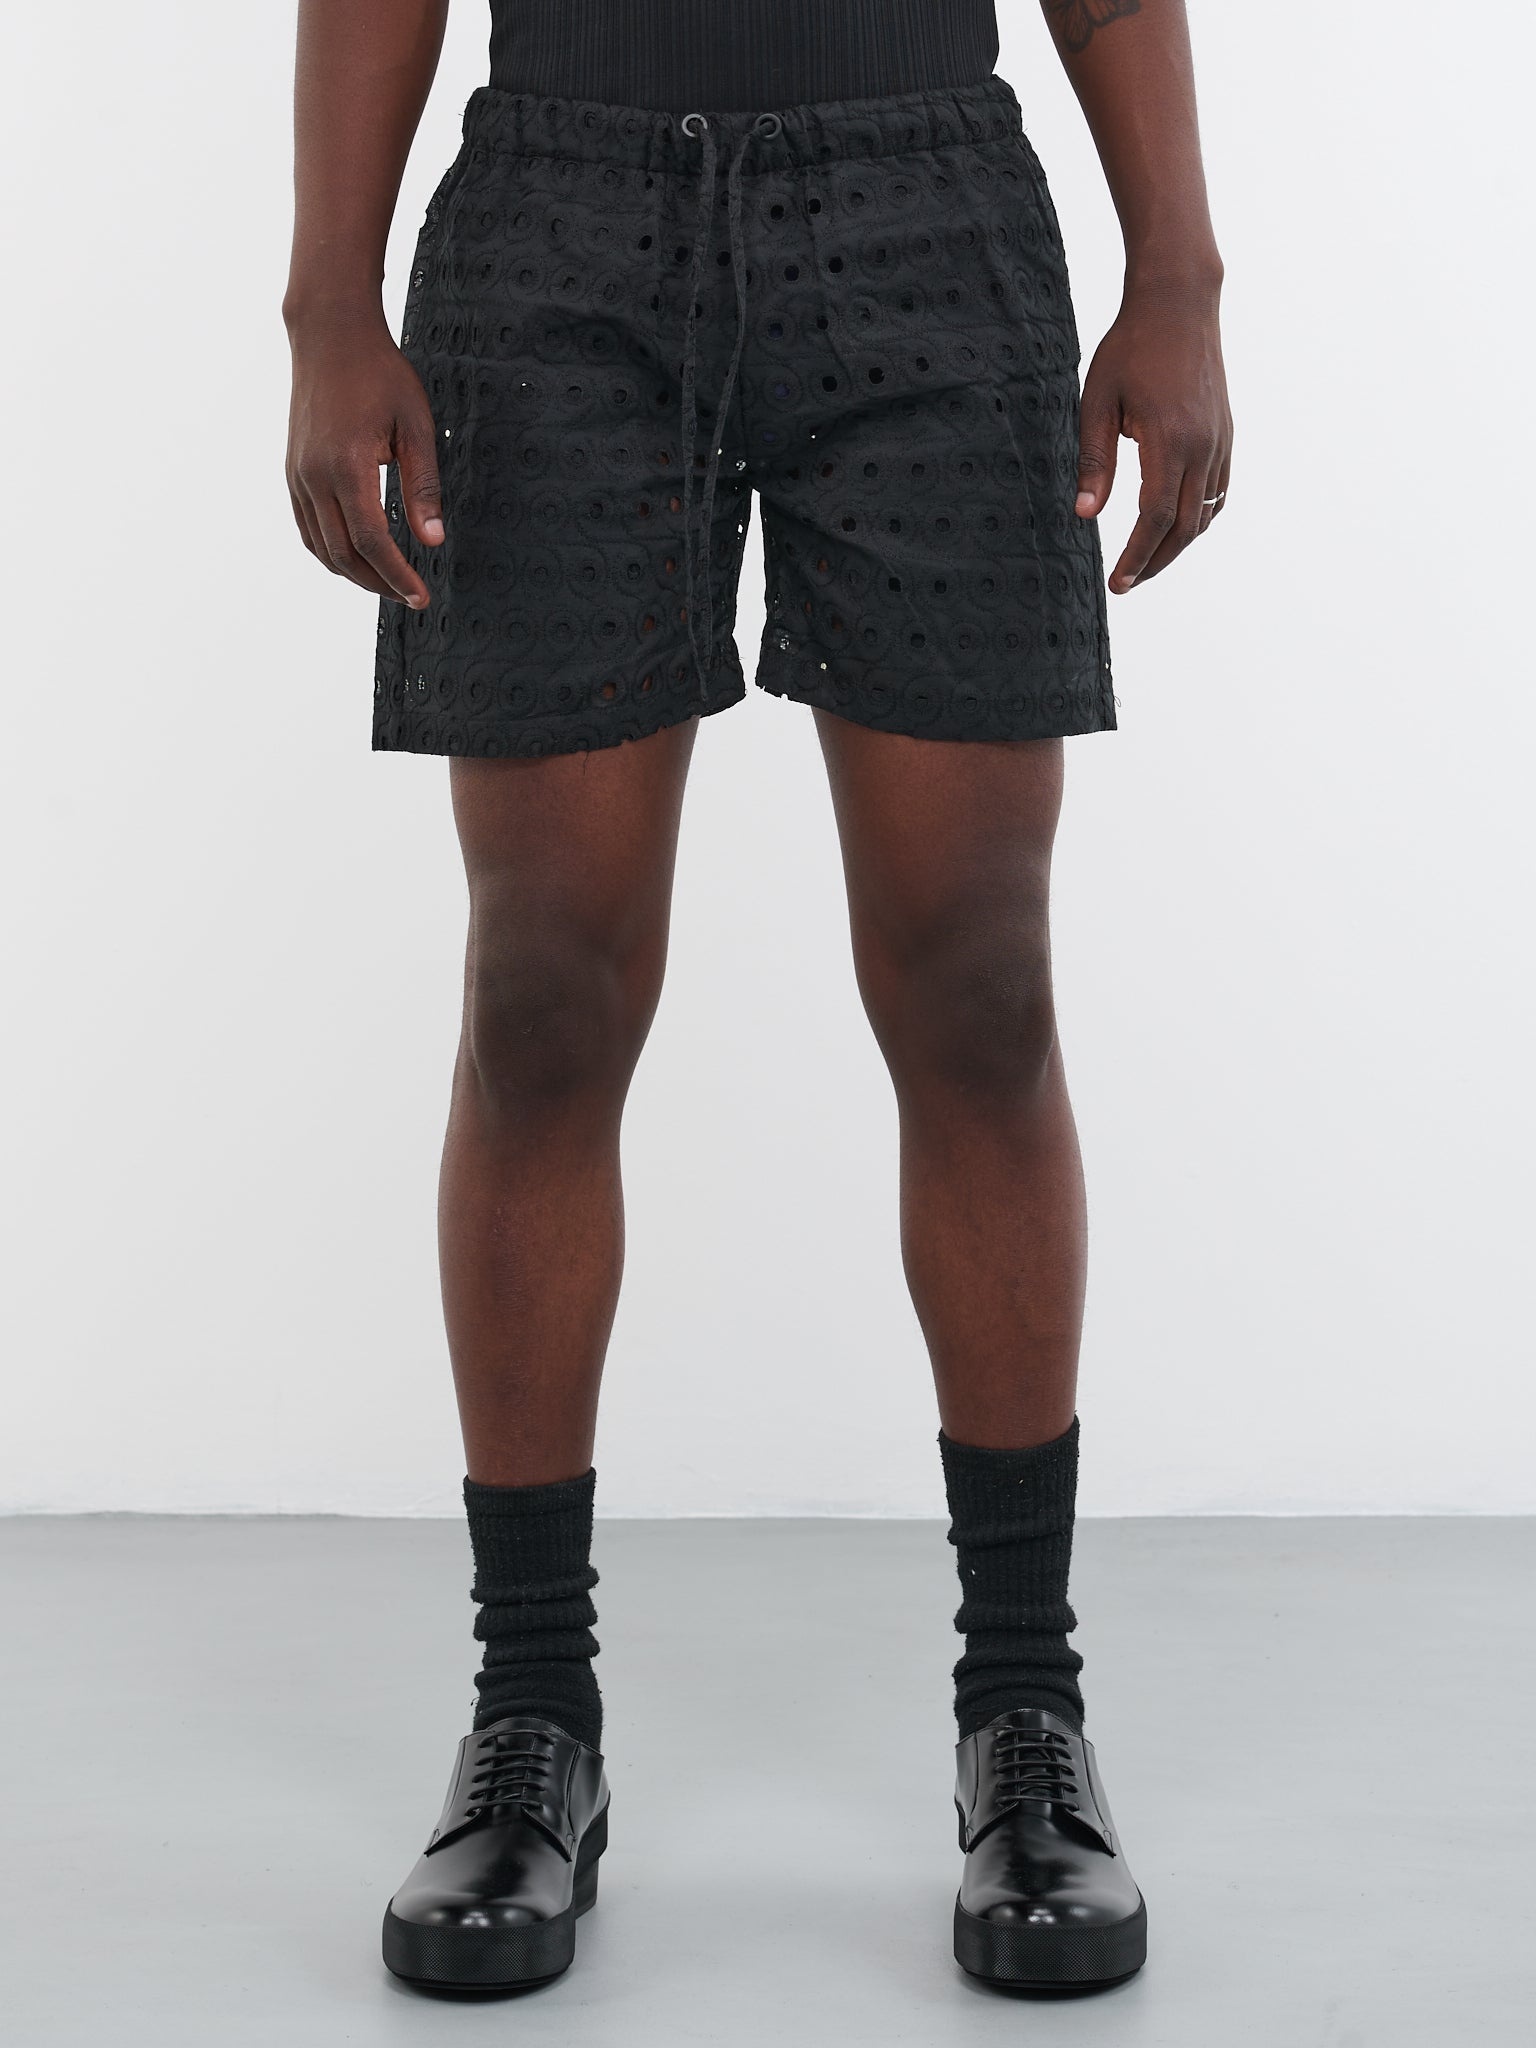 Lace Shorts - 1